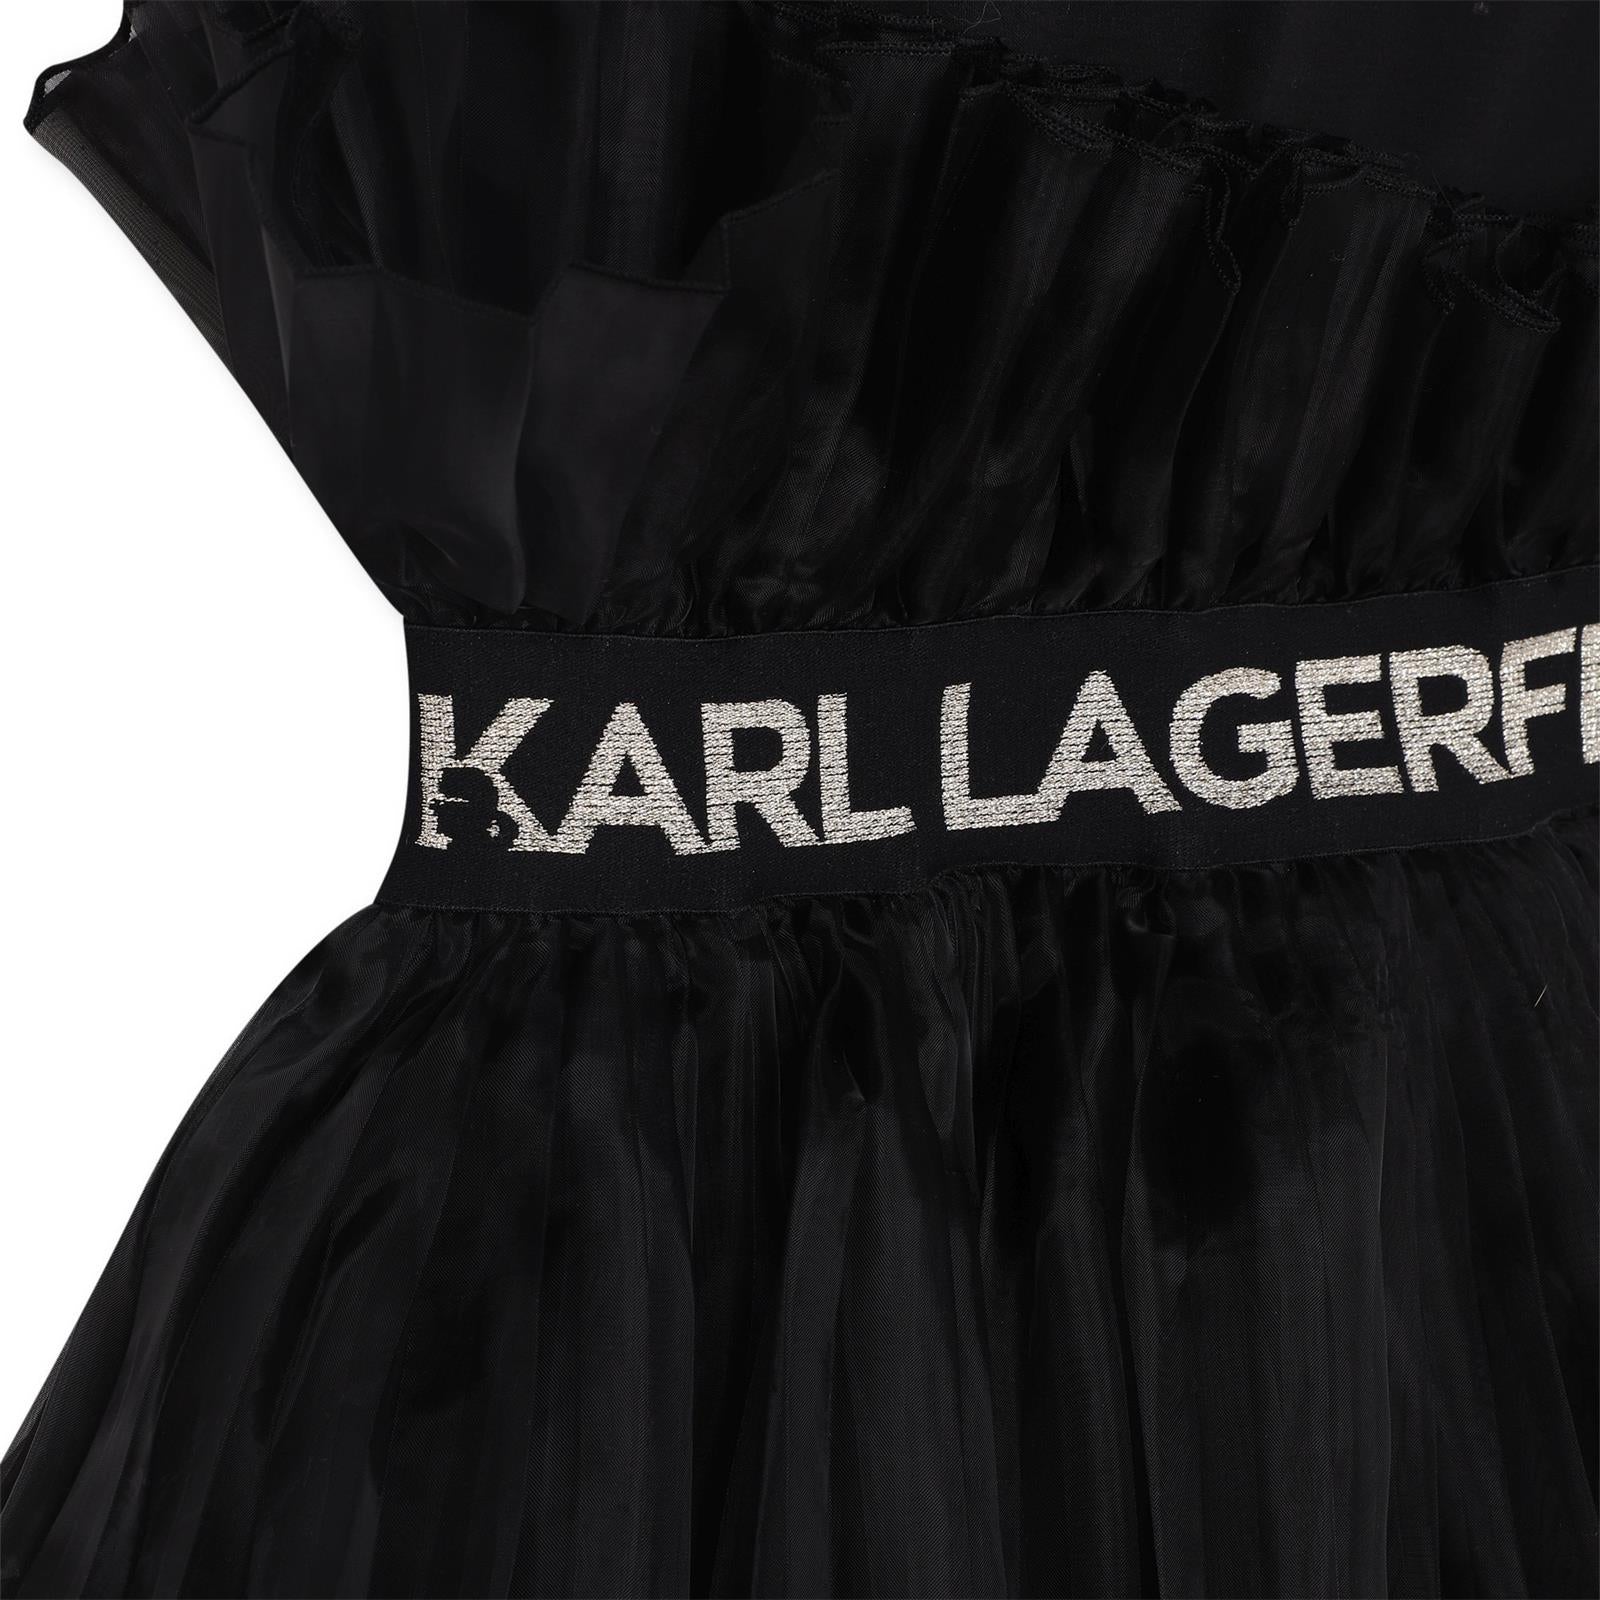 Karl Lagerfeld Ceremony Dress